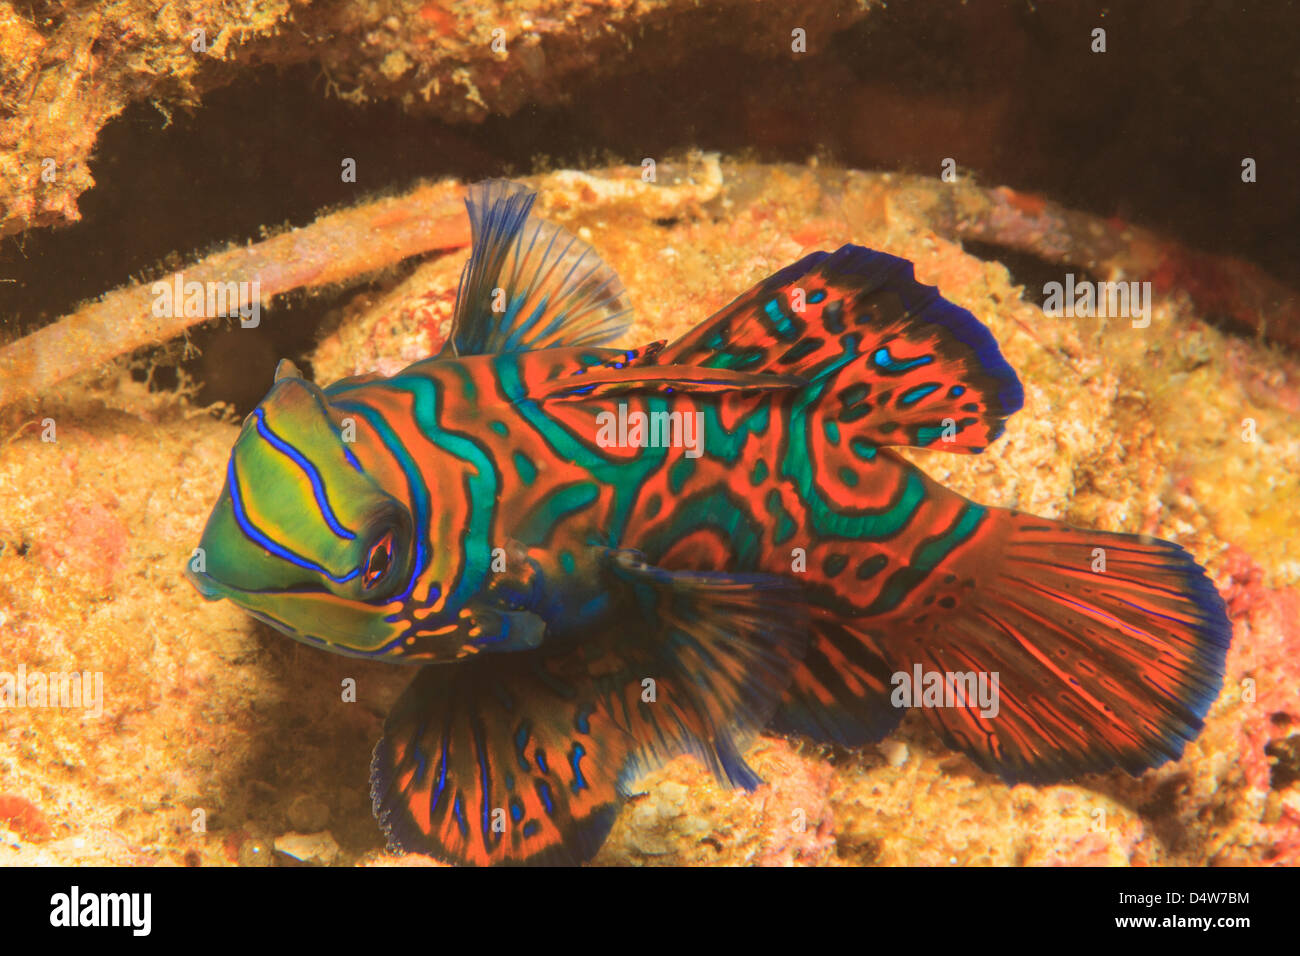 Mandarinfish swimming in coral reef Stock Photo